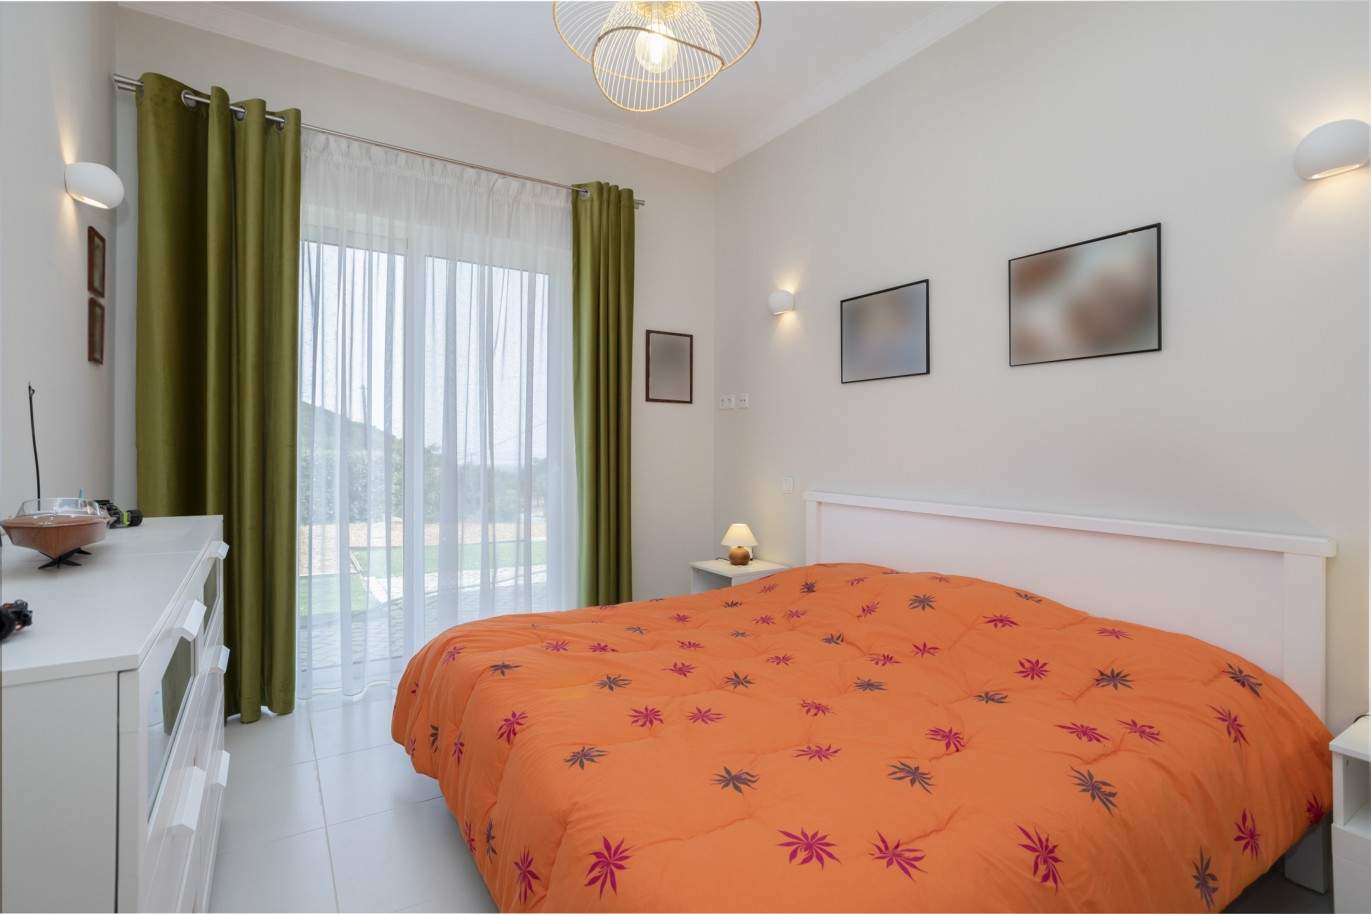 3 Bedroom Villa with swimming pool, for sale in Estoi, Algarve_201375